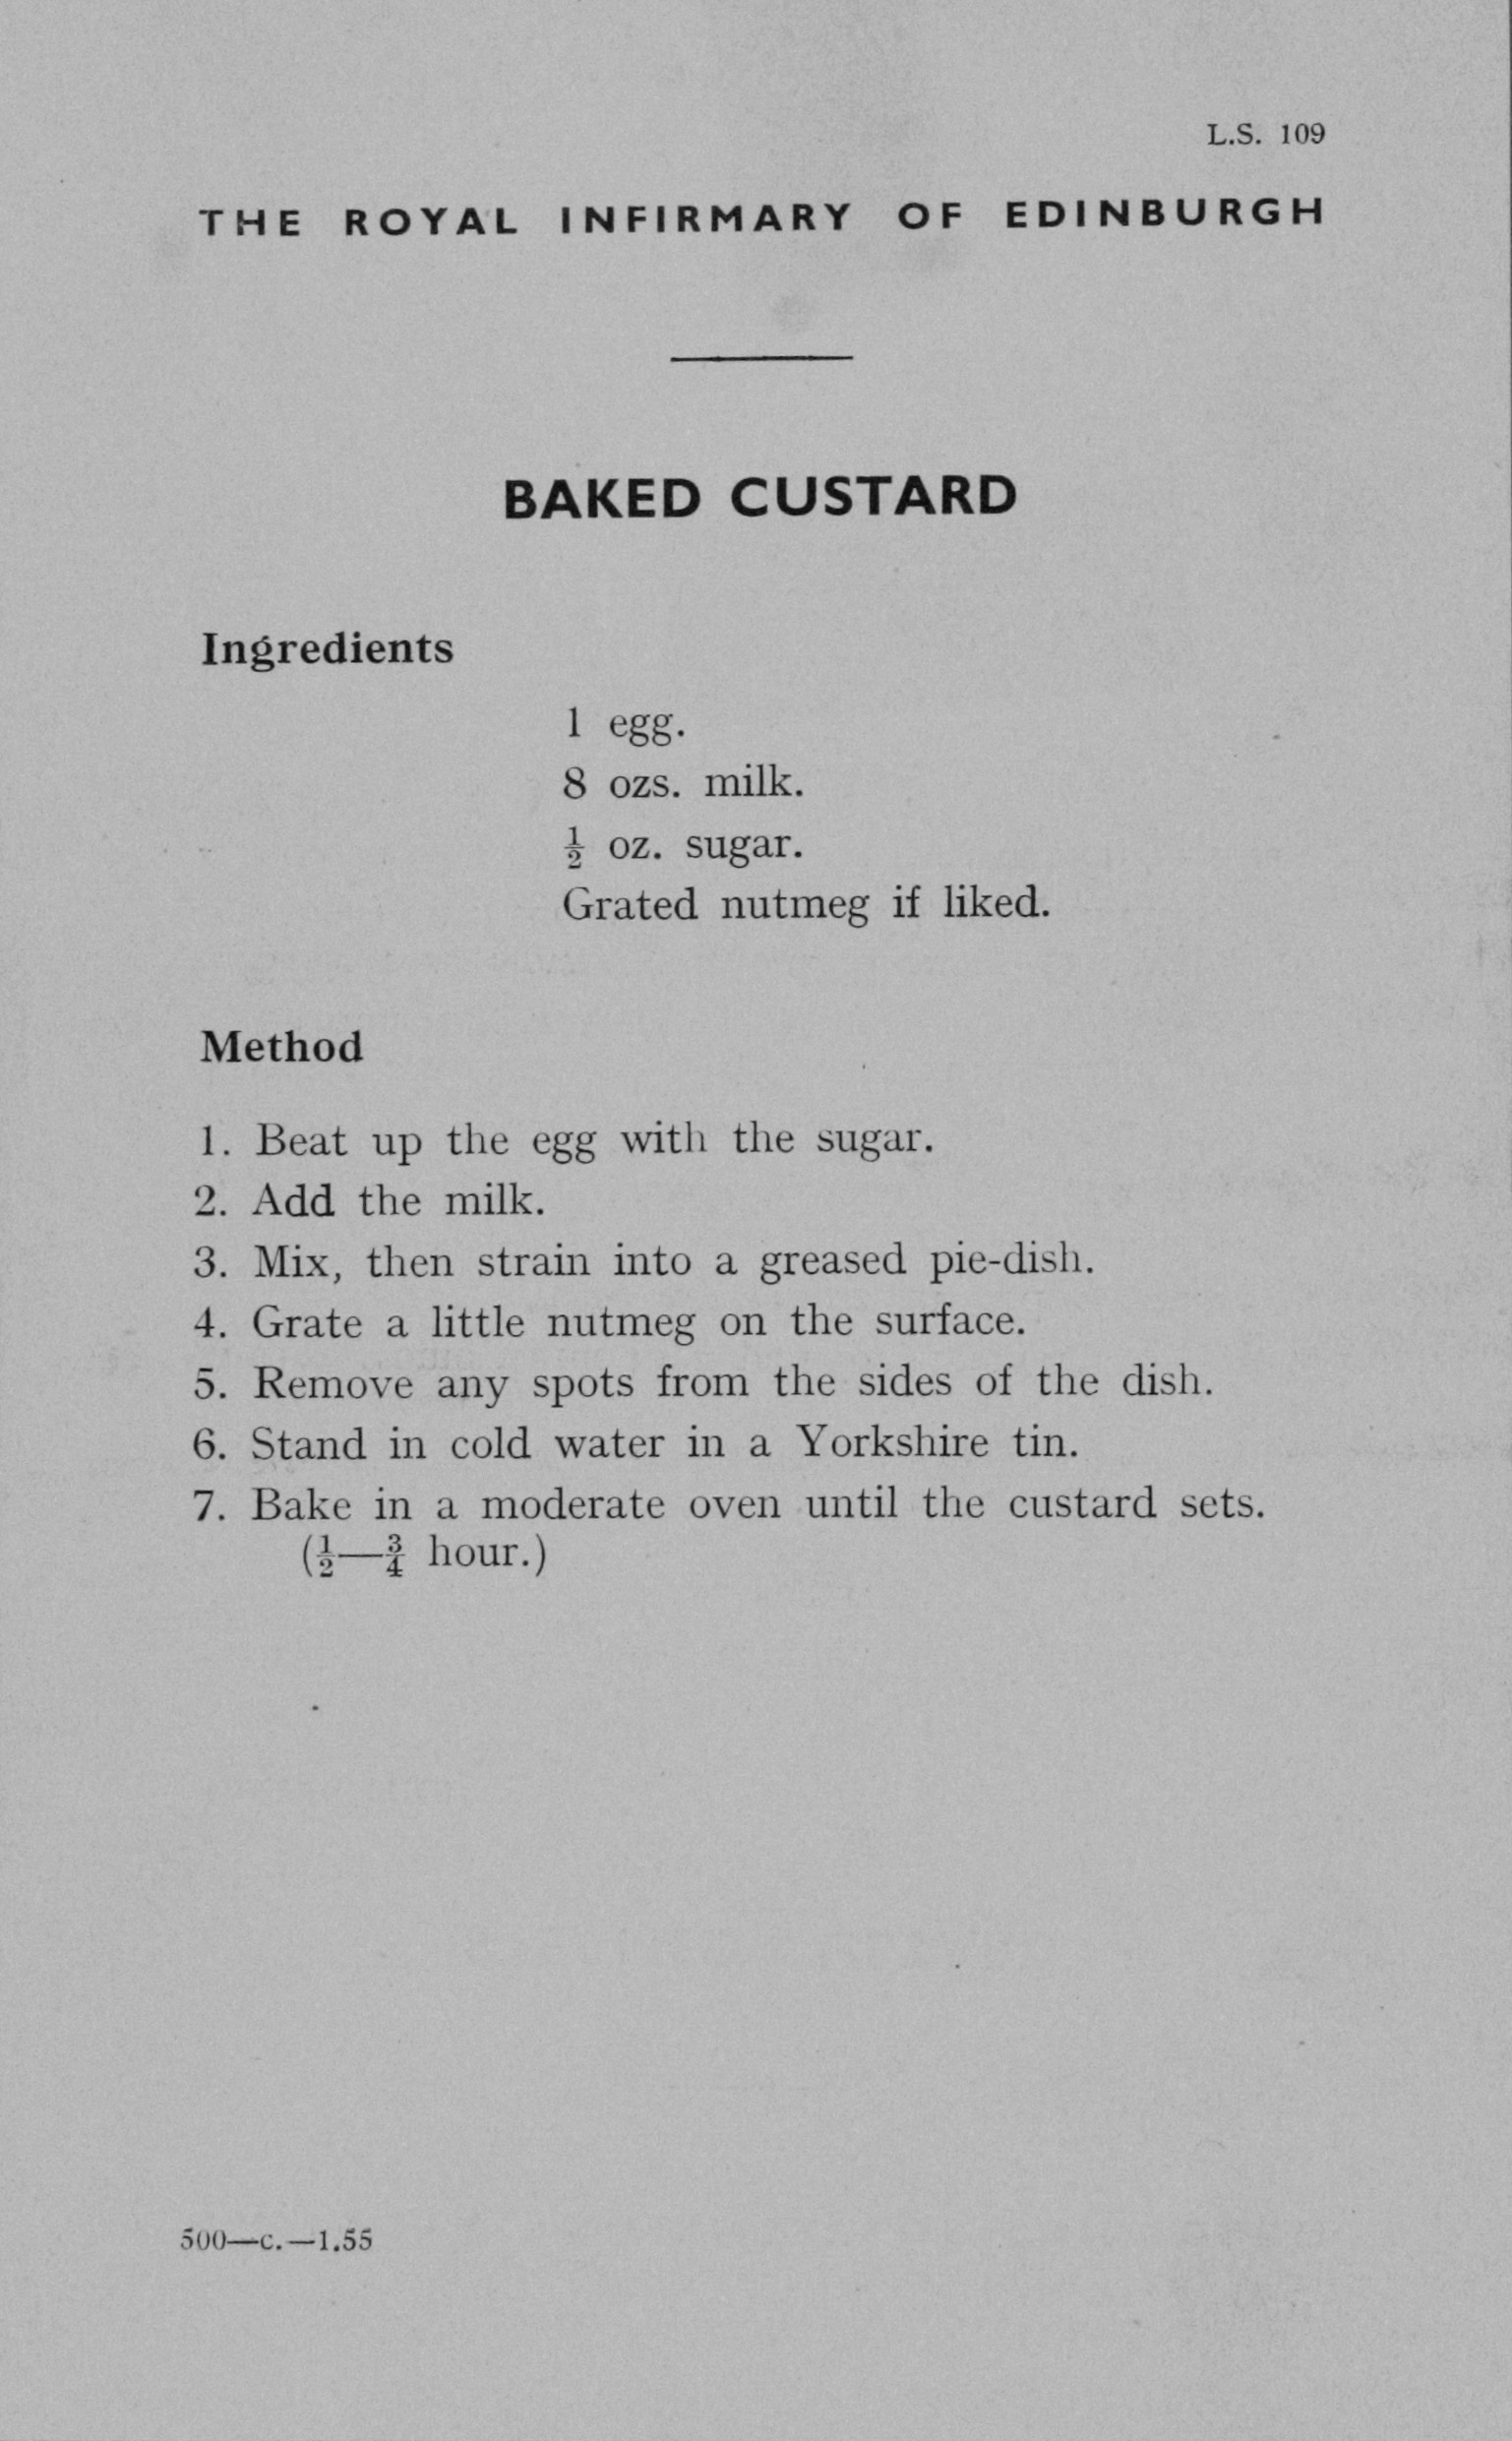 Recipe for baked custard